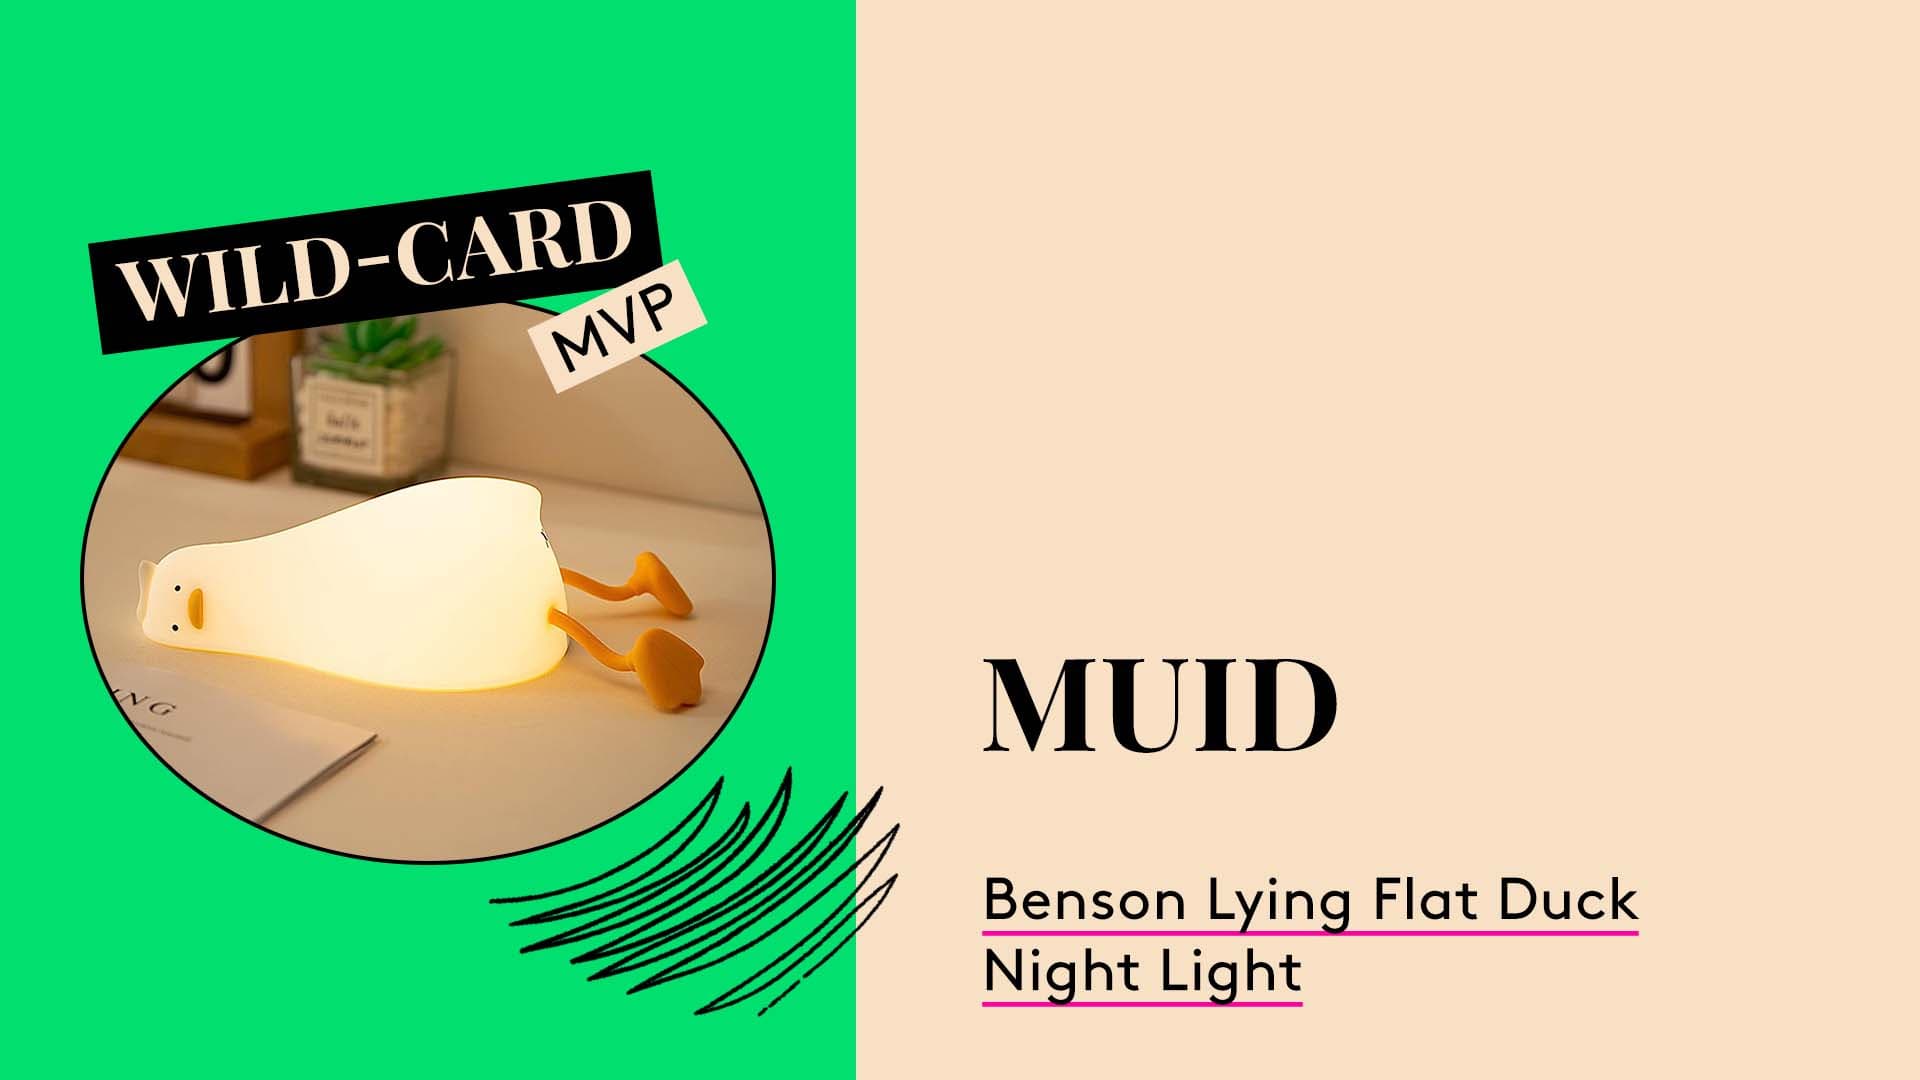 Wild Card MVP. MUID Benson Lying Flat Duck Night Light.